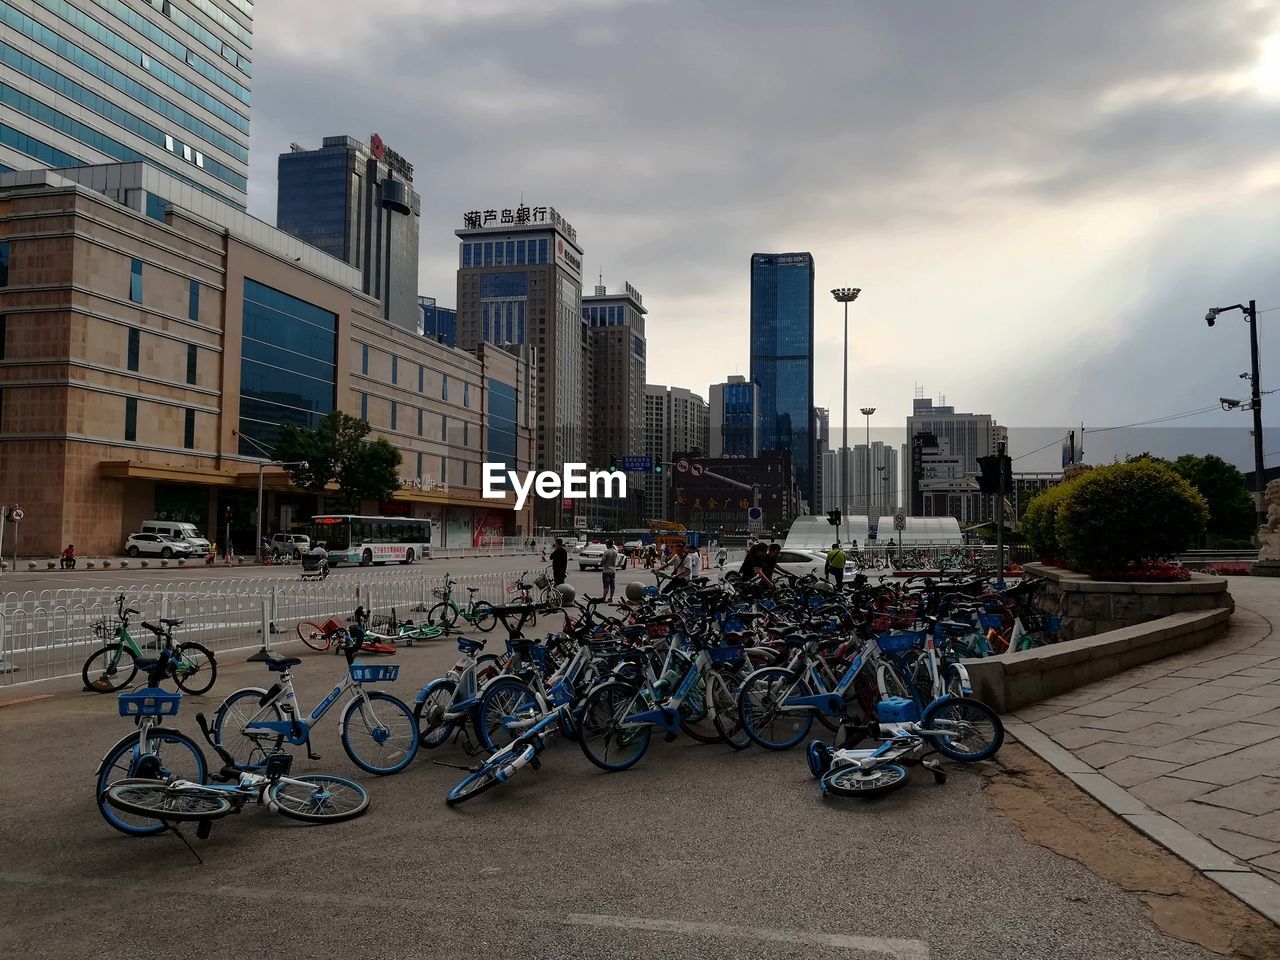 BICYCLES AGAINST BUILDINGS IN CITY